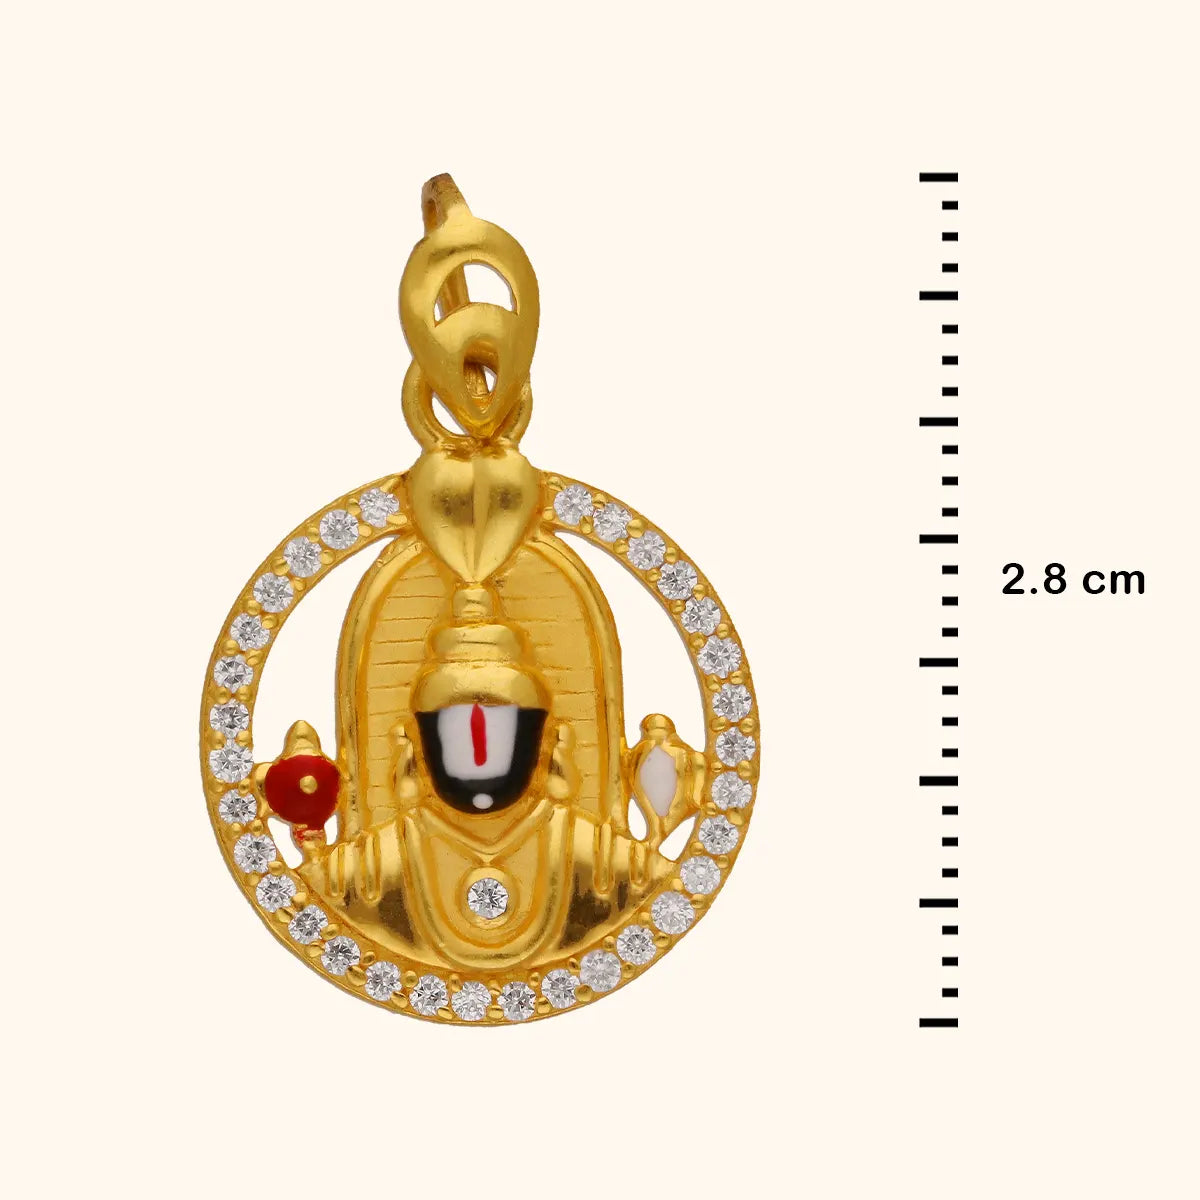 Tirupati Balaji Gold Pendant